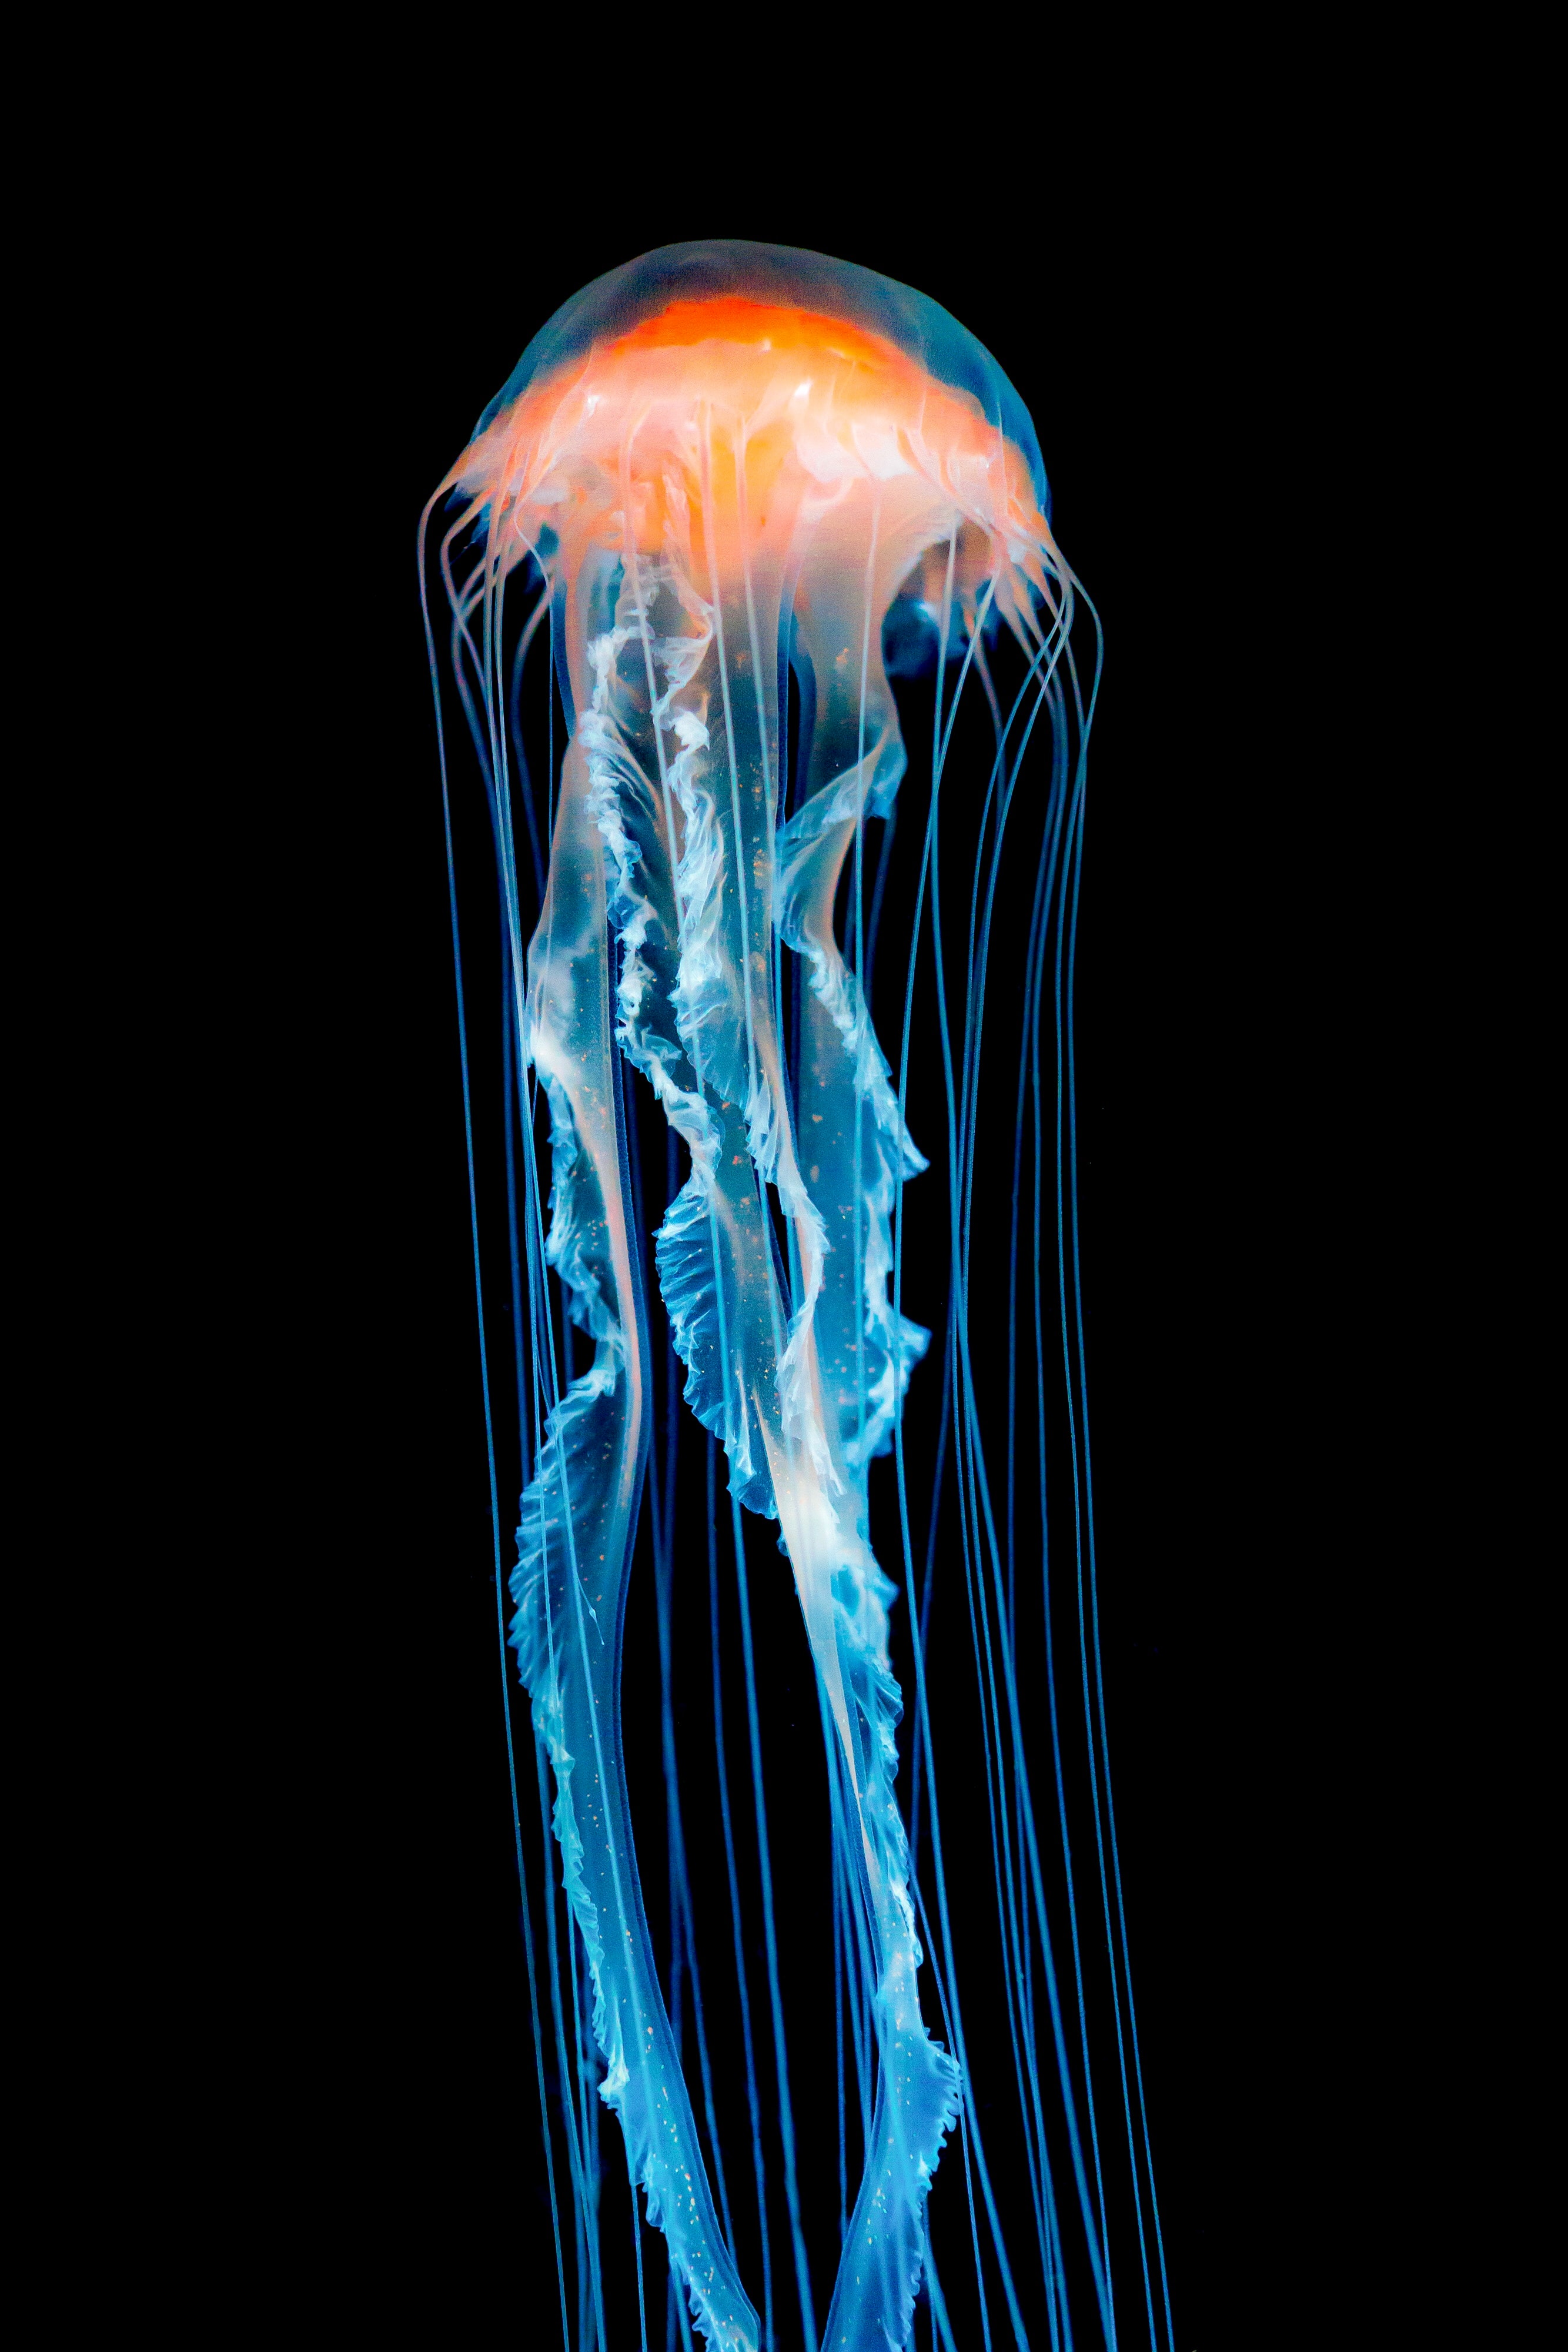 jellyfish, tentacle, black, animals